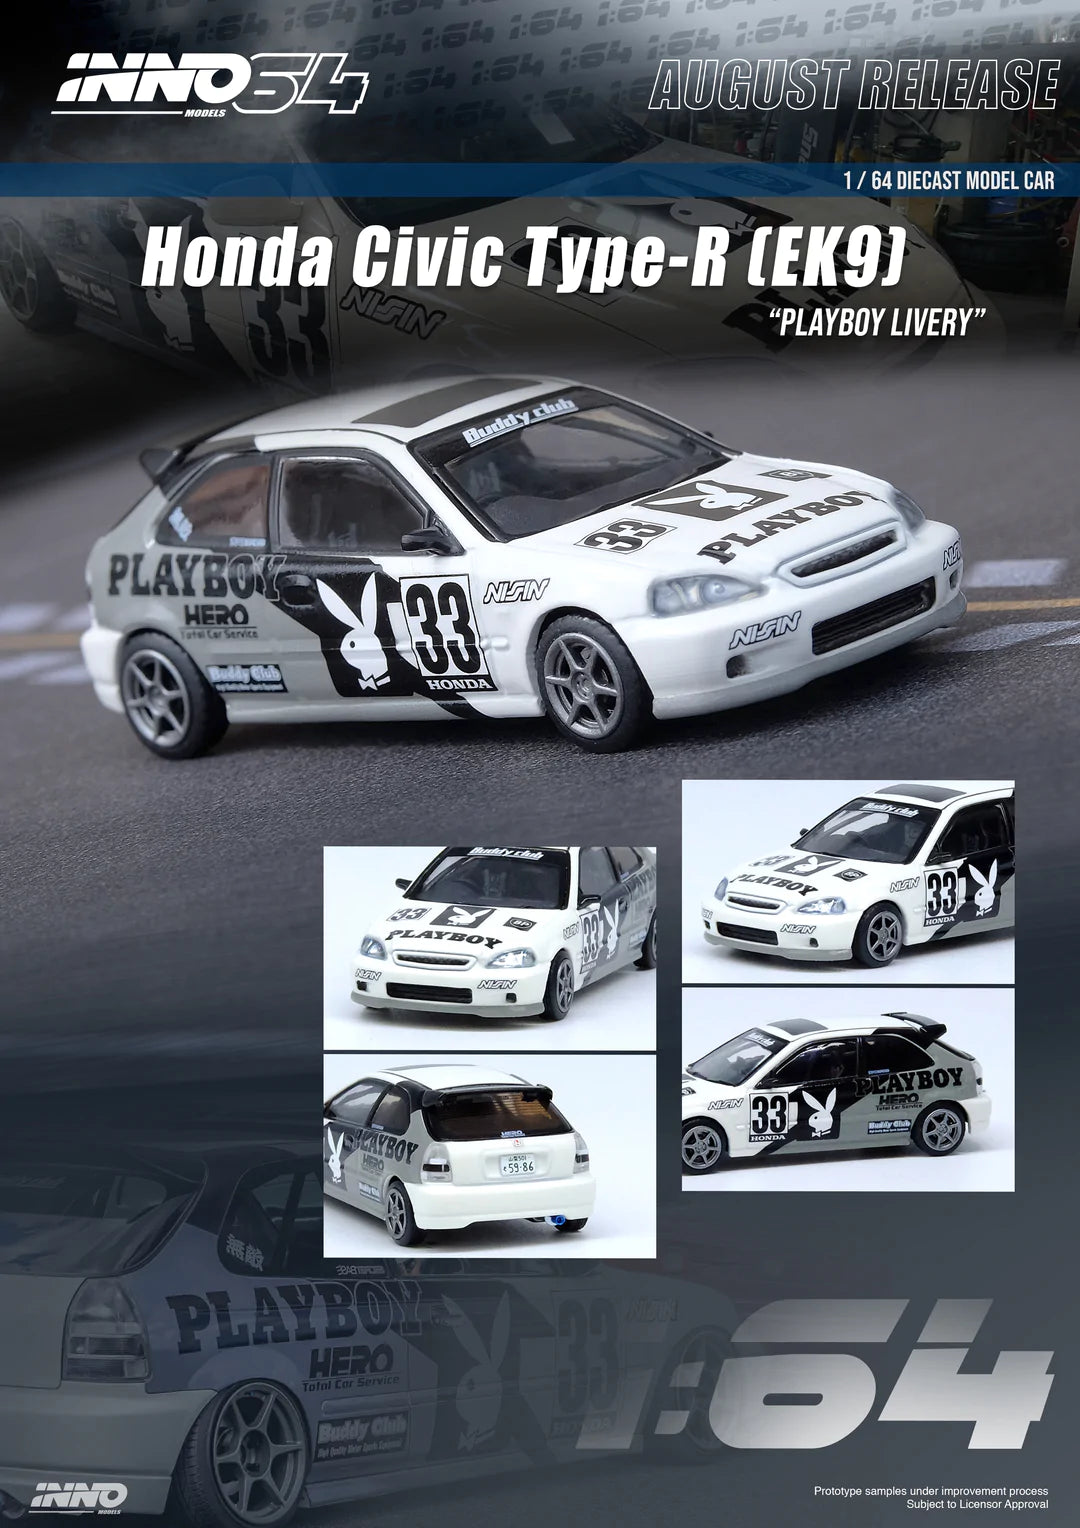 INNO 64 Honda Civic Type-R (EK9) "PLAYBOY" Livery